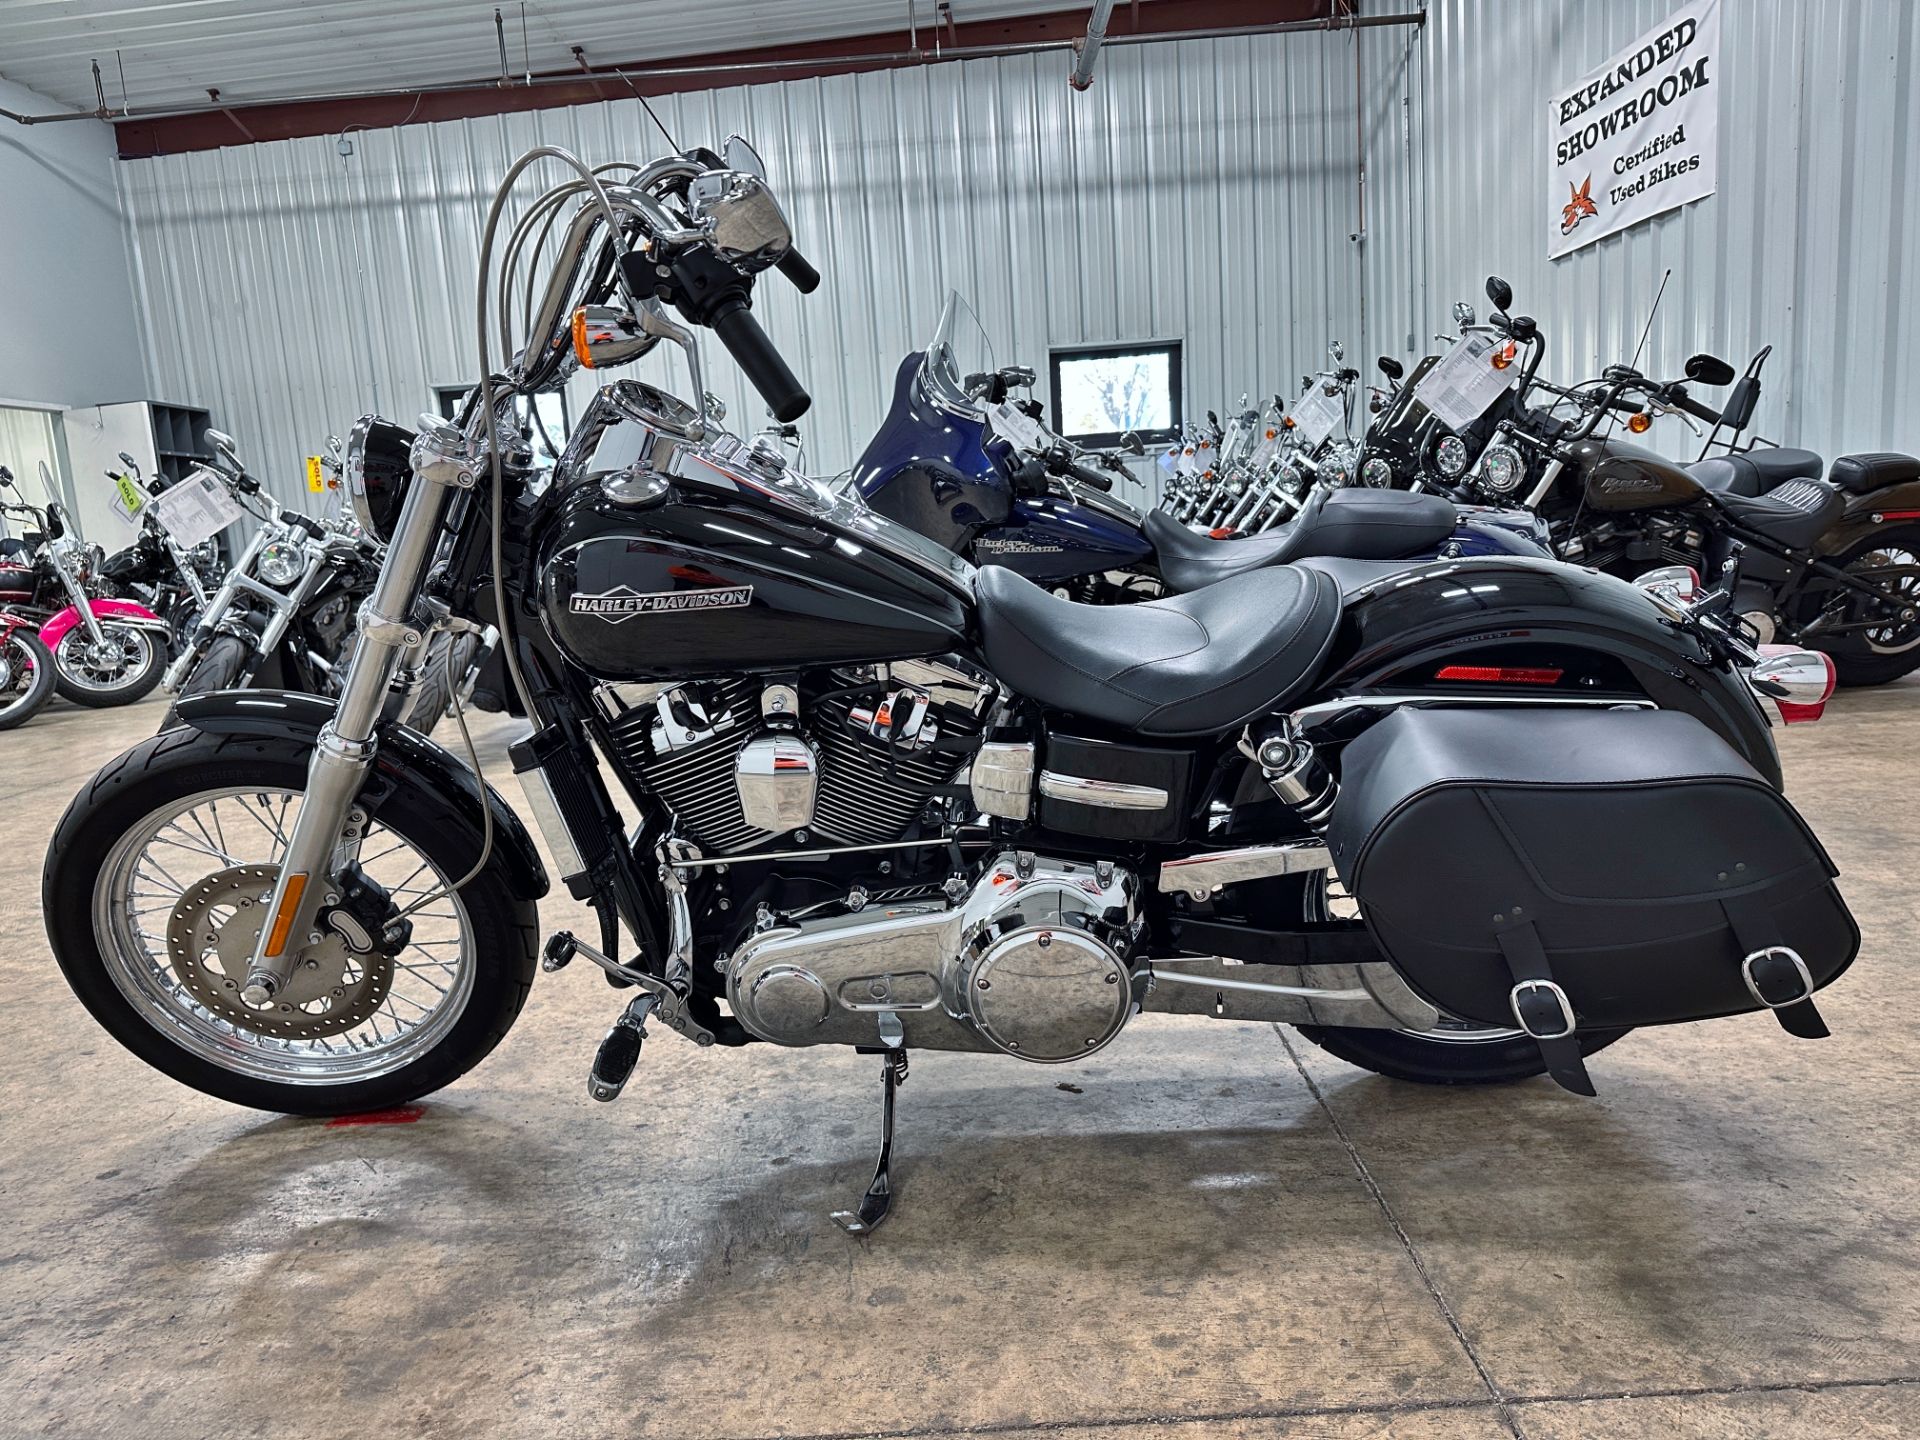 2013 Harley-Davidson Dyna® Super Glide® Custom in Sandusky, Ohio - Photo 5